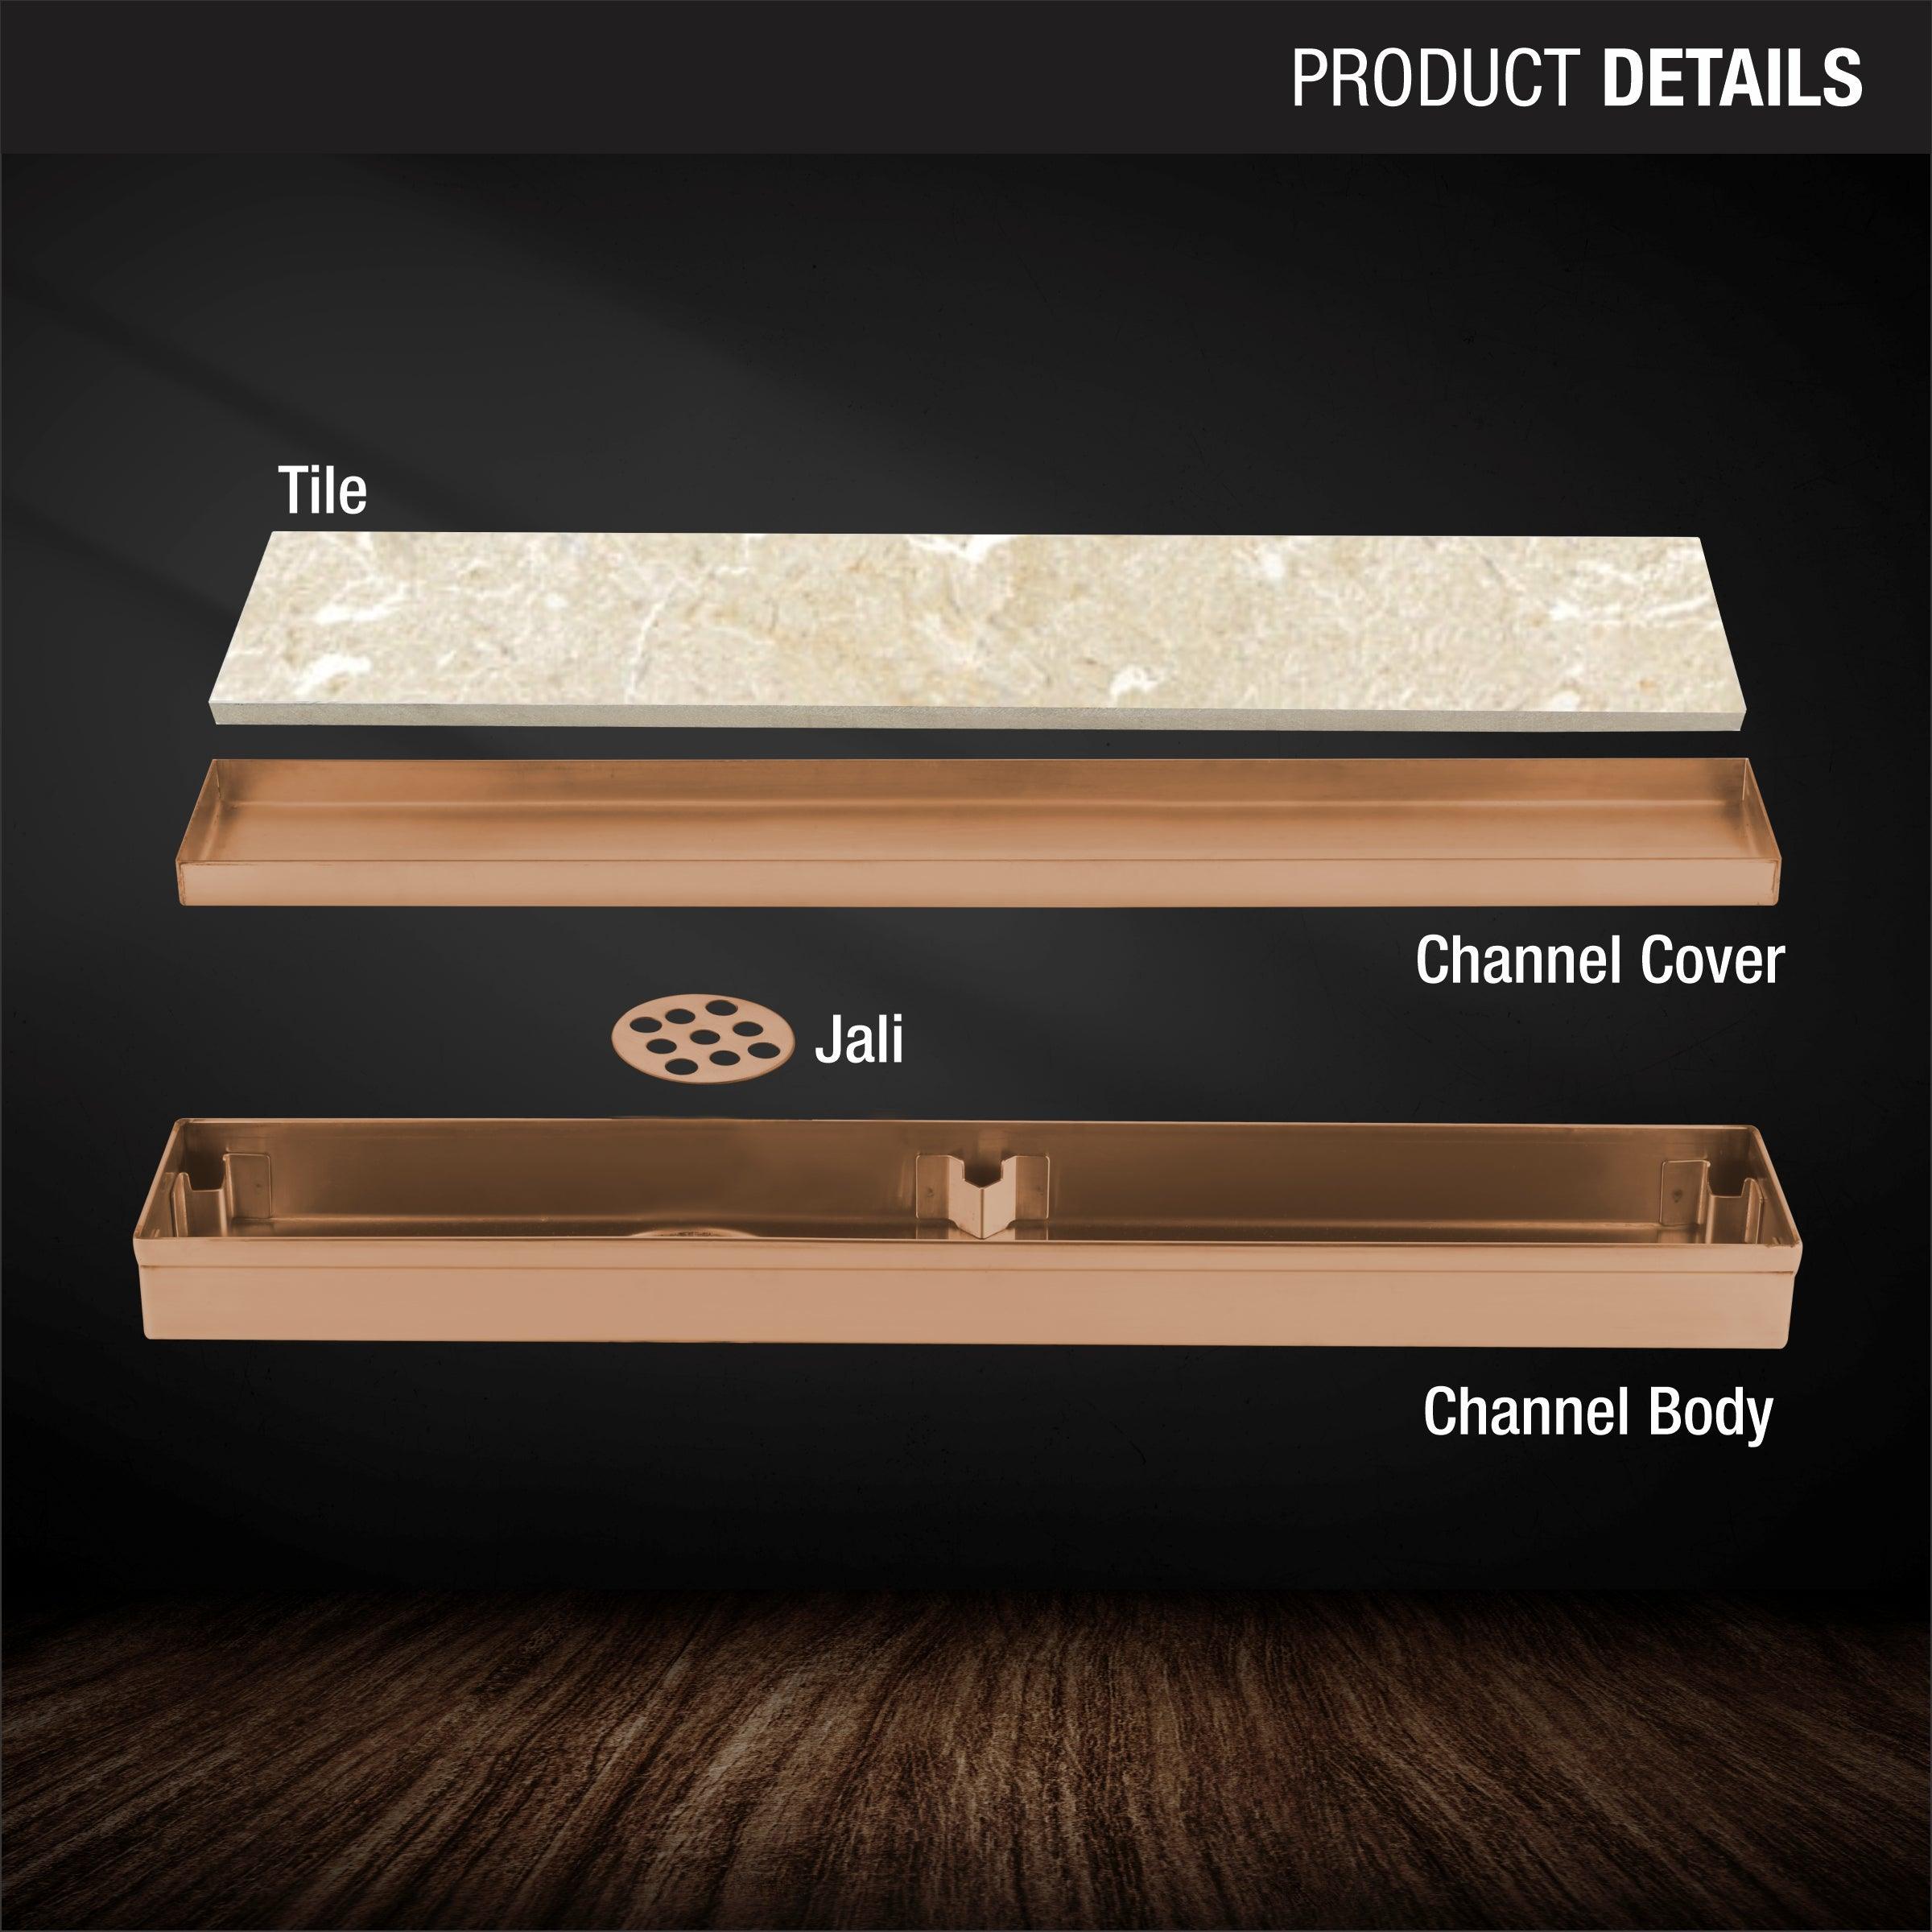 Tile Insert Shower Drain Channel - Antique Copper (36 x 2 Inches) product details